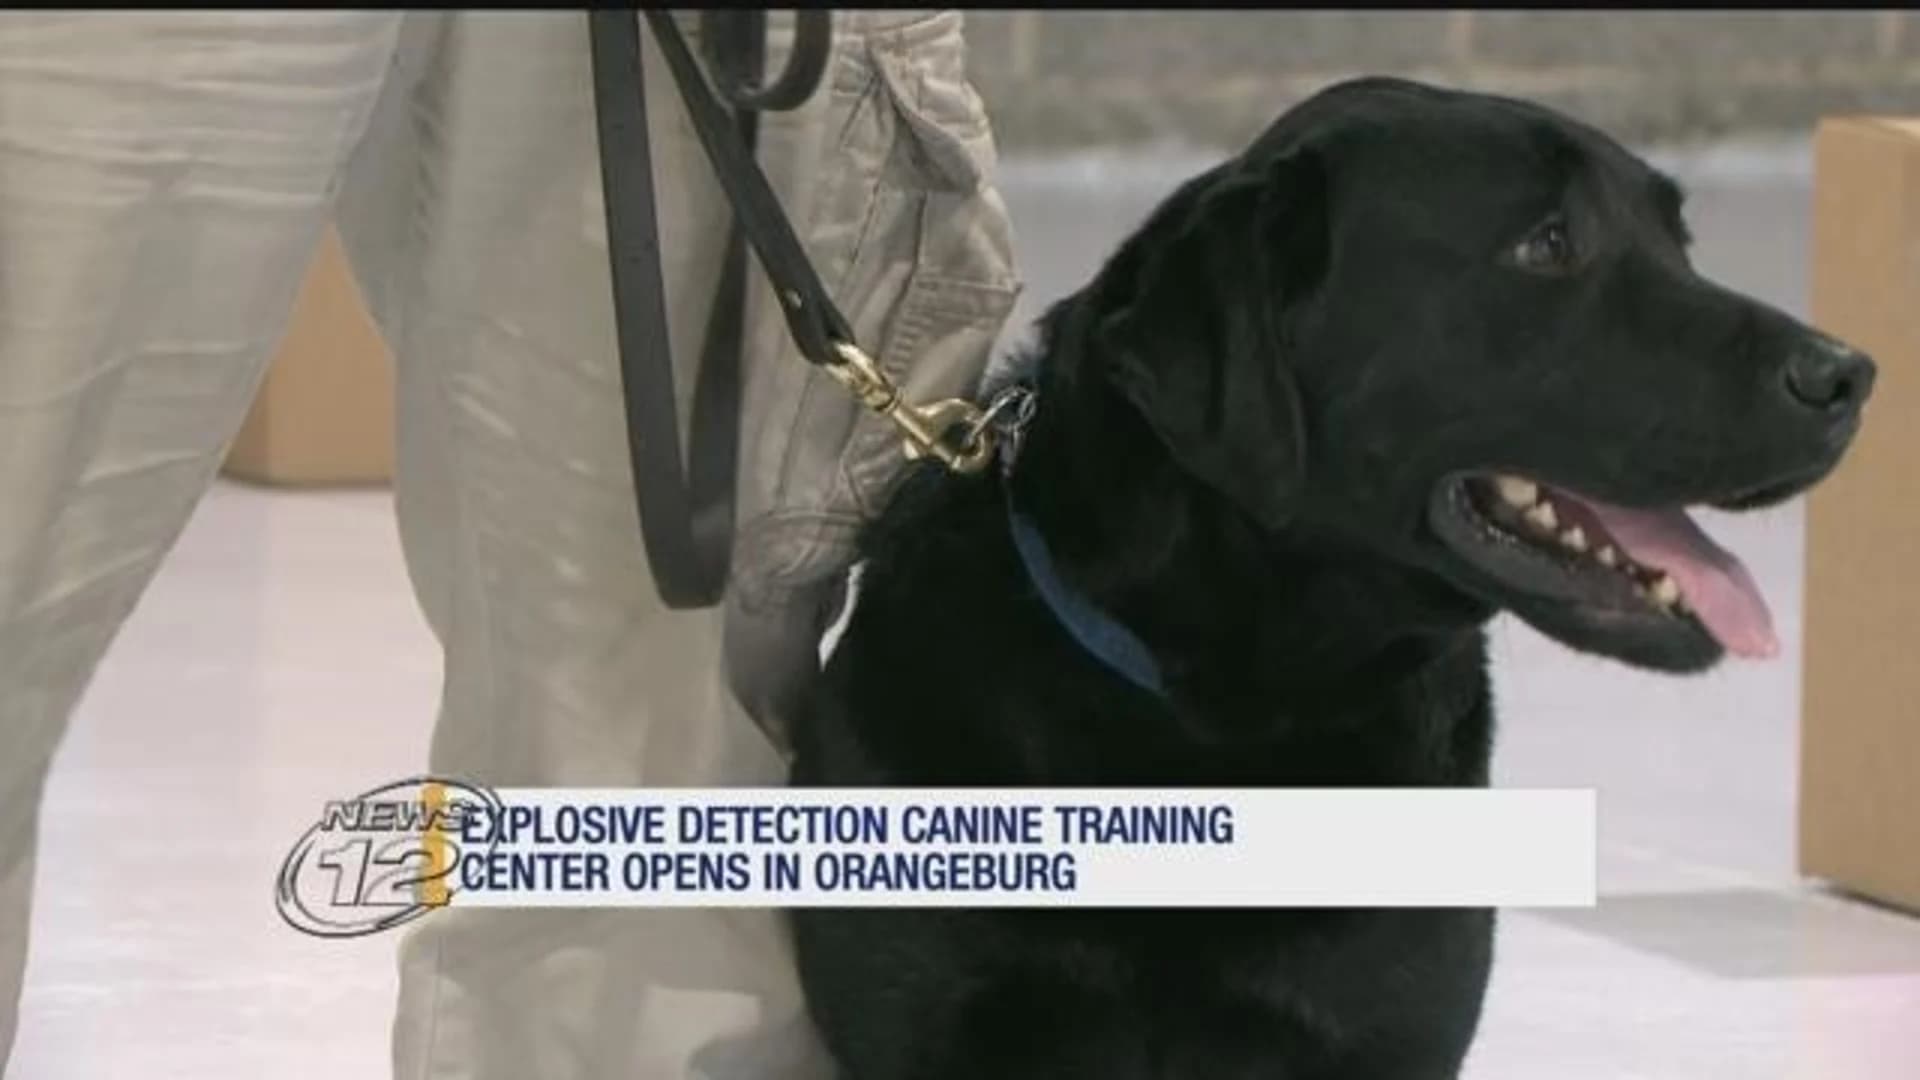 K-9 center in Orangeburg uses live explosives to train dogs